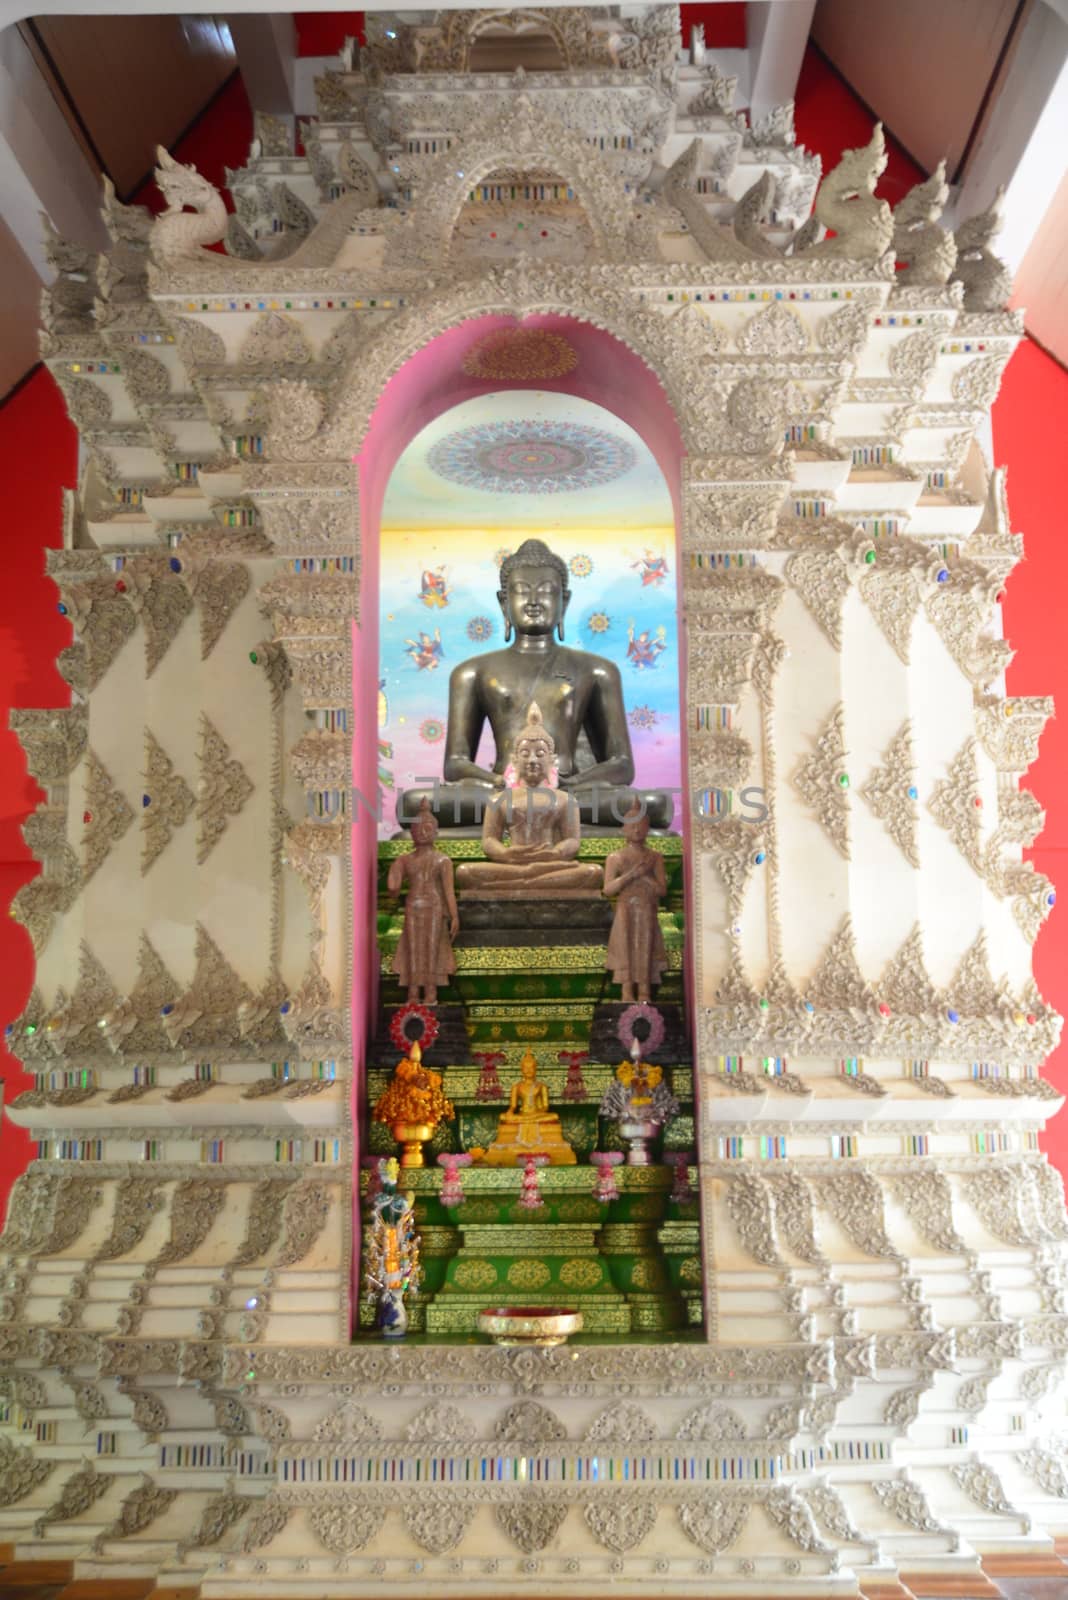 Phayao, Thailand – 21 December, 2019 : Buddha statue in bower at Wat Analyo Thipayaram, Phayao province, Thailand